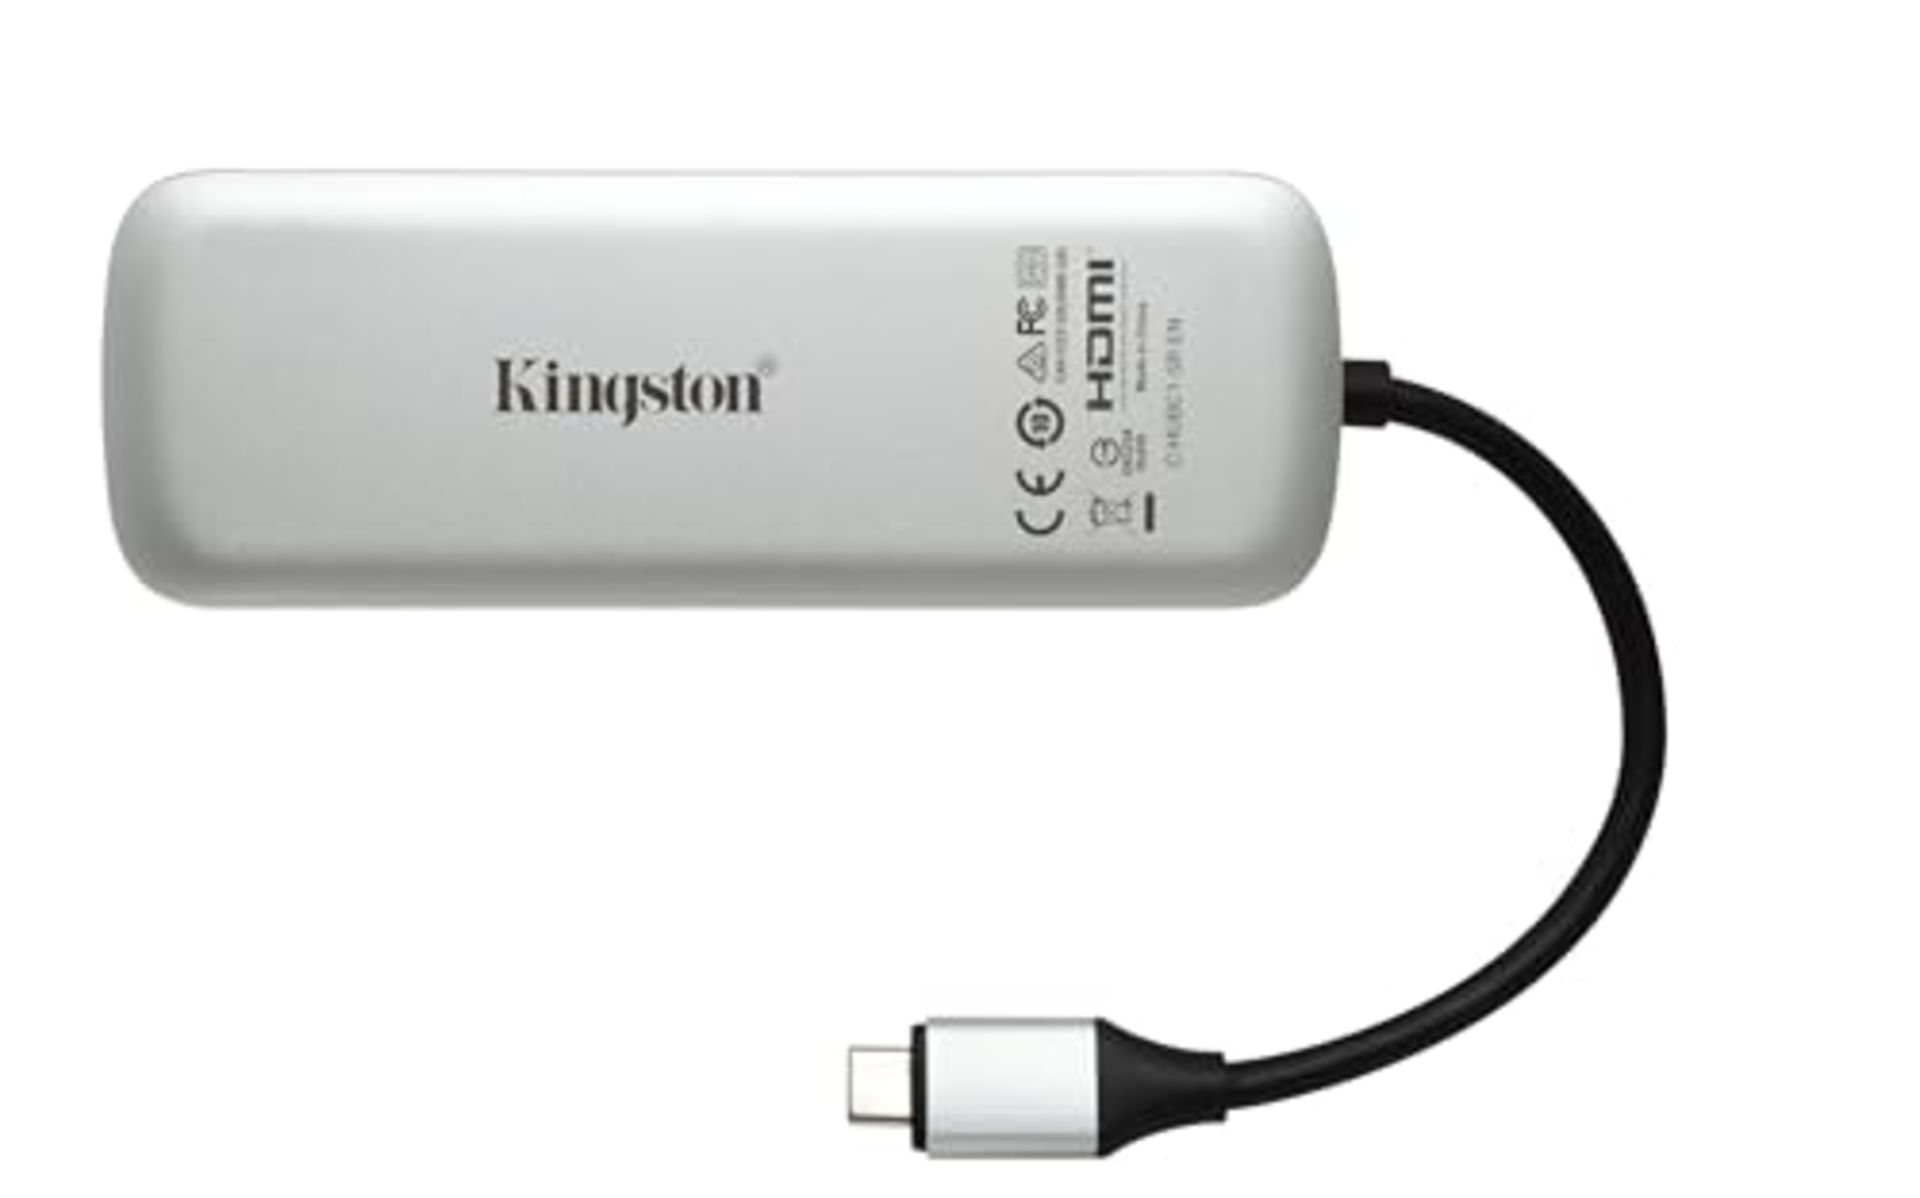 Kingston C-HUBC1-SR-EN - USB C Hub, Type C Adapter with USB 3.0, HDMI, SD/MicroSD, Pow